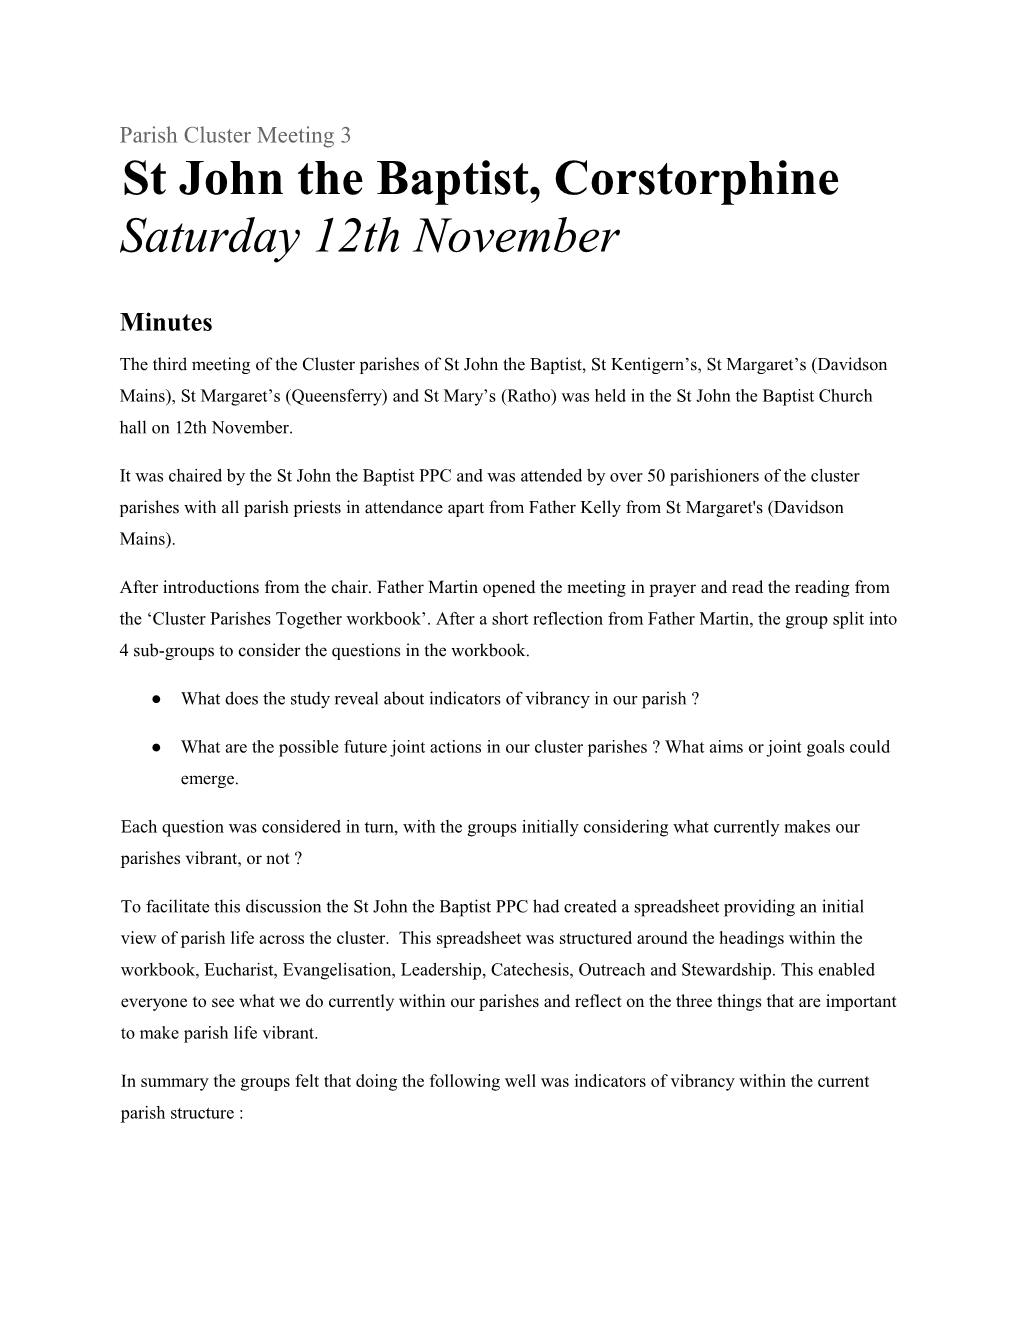 St John the Baptist, Corstorphine